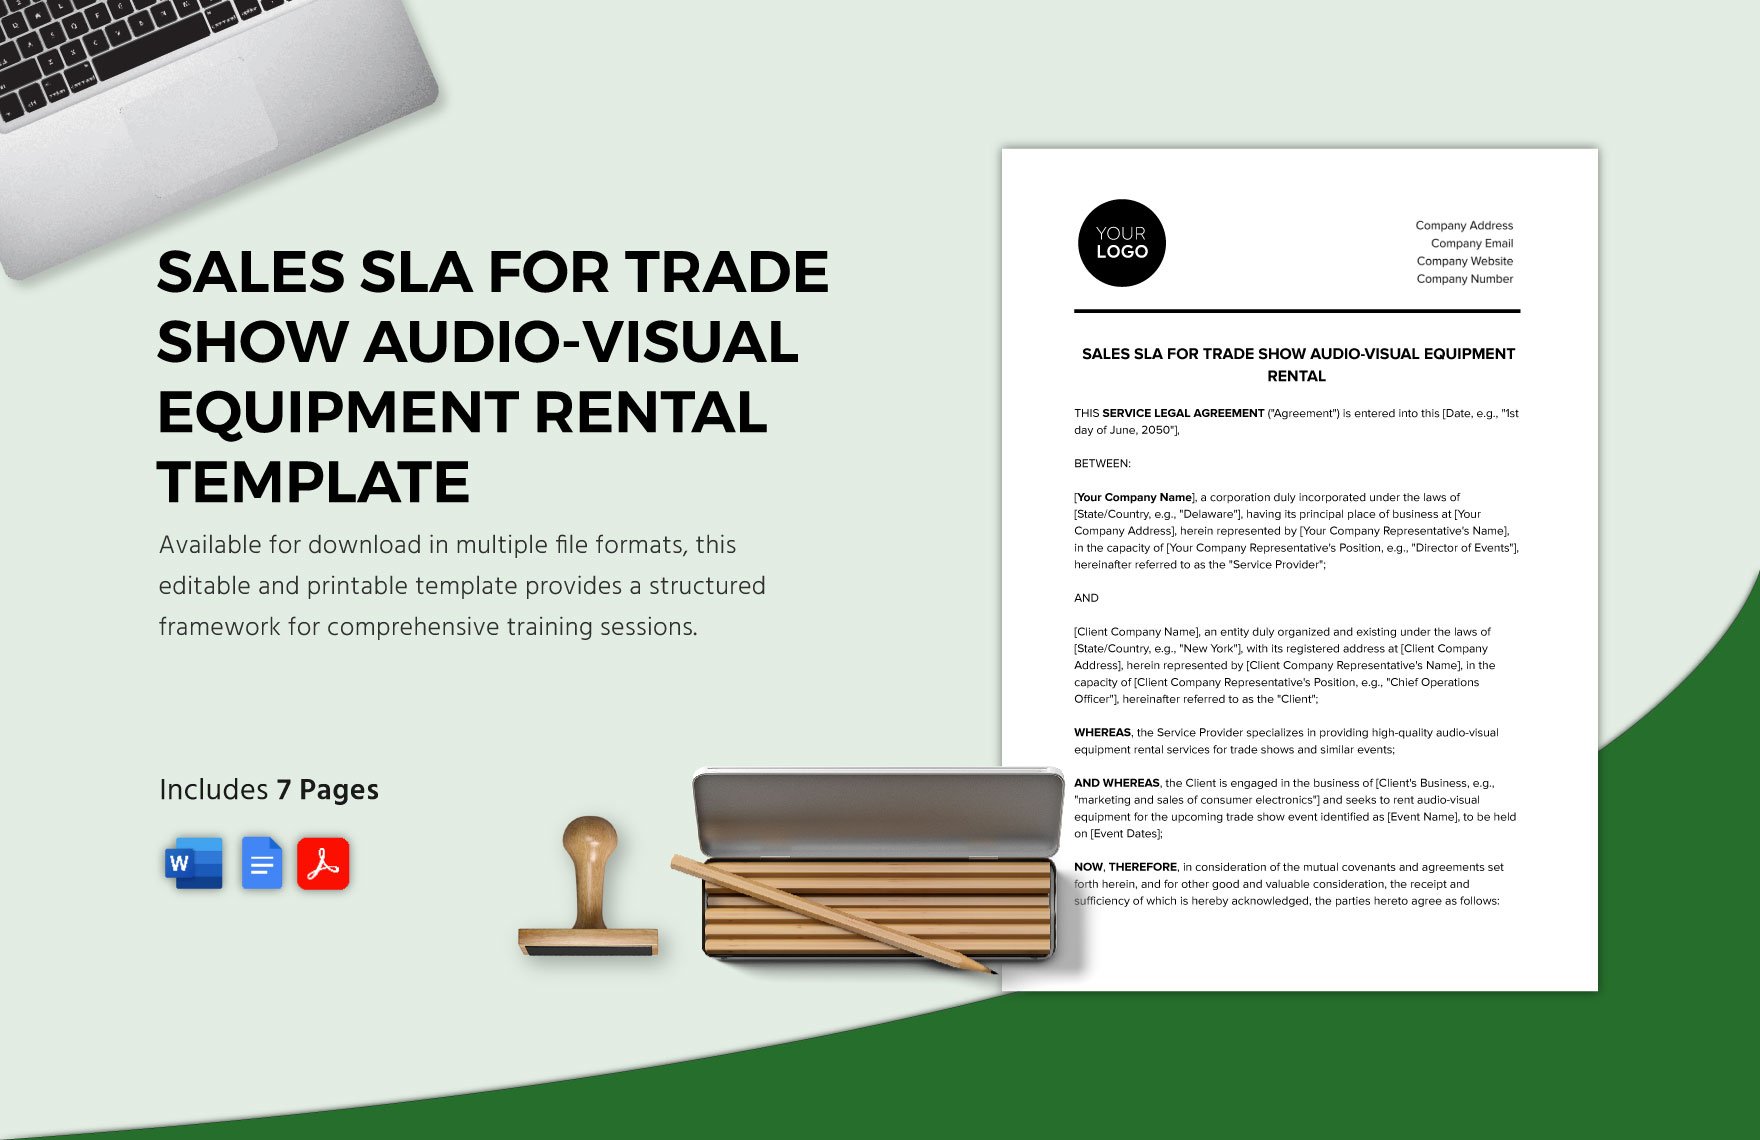 Sales SLA for Trade Show Audio-Visual Equipment Rental Template in Word, Google Docs, PDF